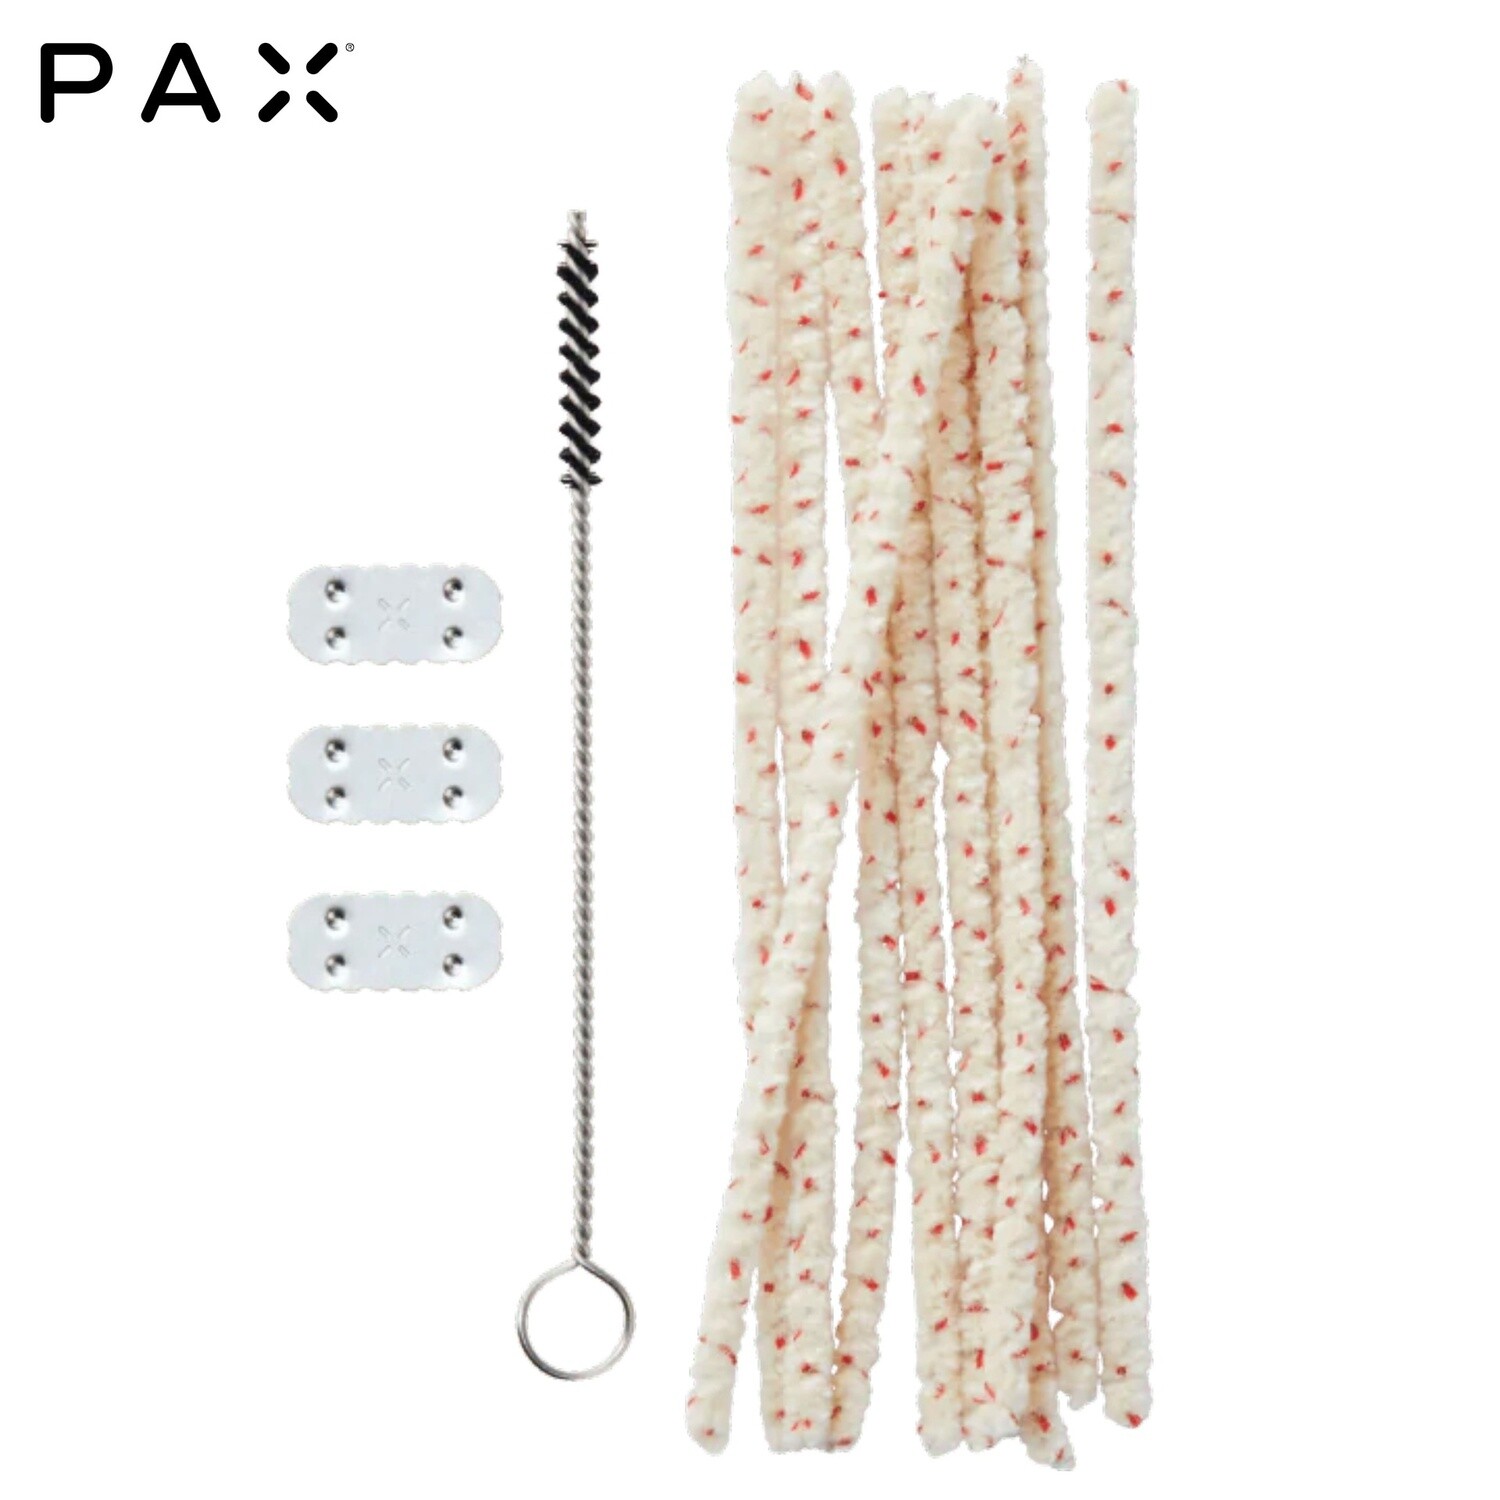 PAX® Maintenance Kit